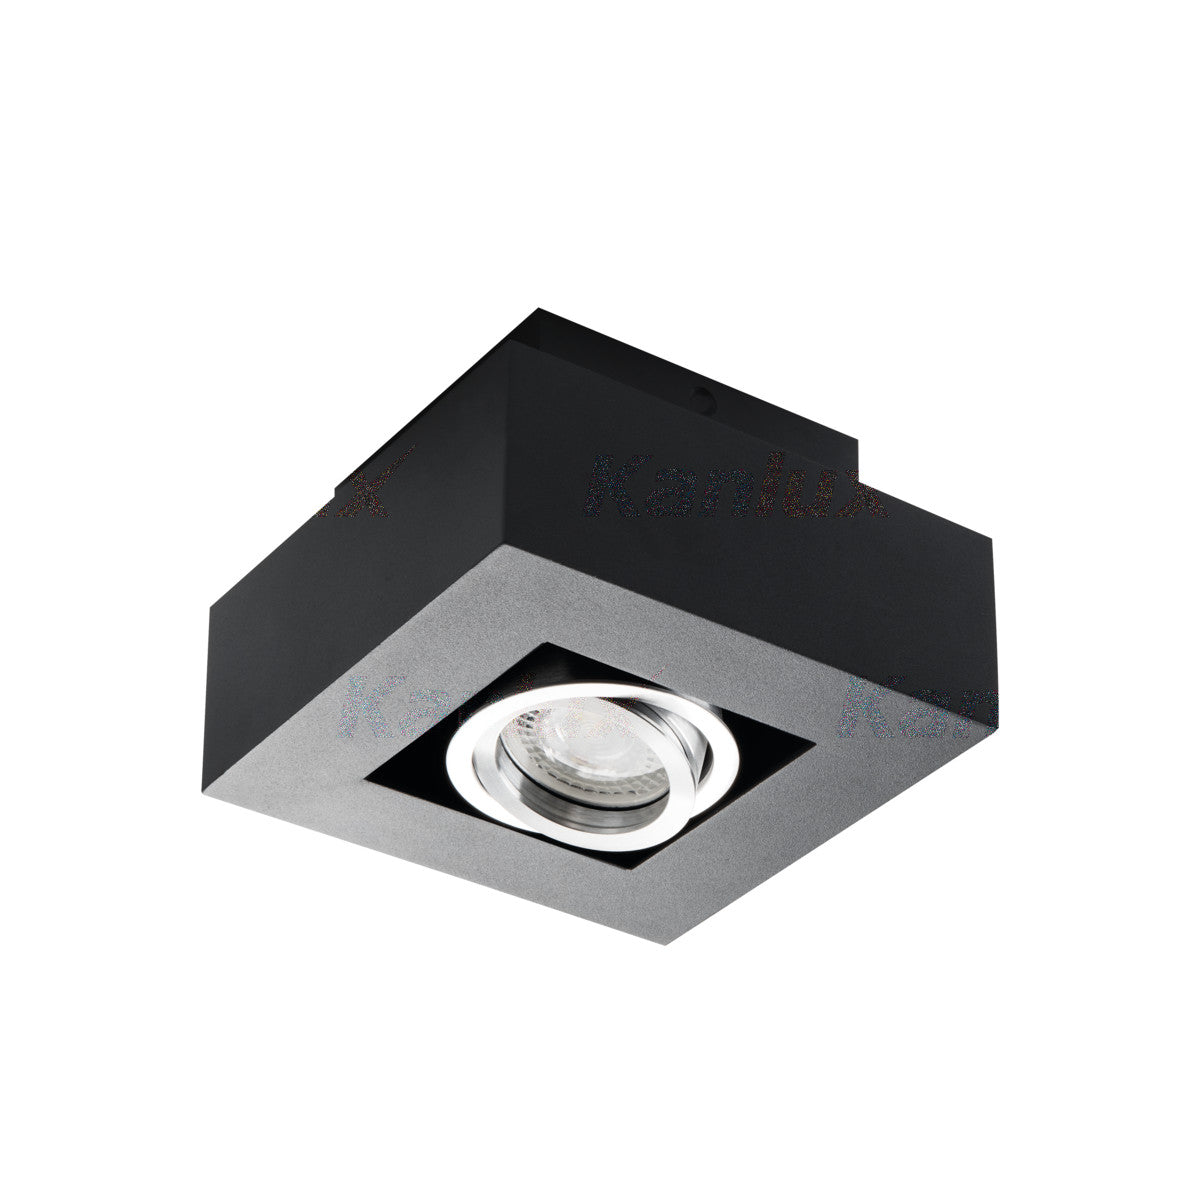 Kanlux STOBI Spot Ceiling Mounted Square Adjustable Tilt Angle GU10 Light Decorative